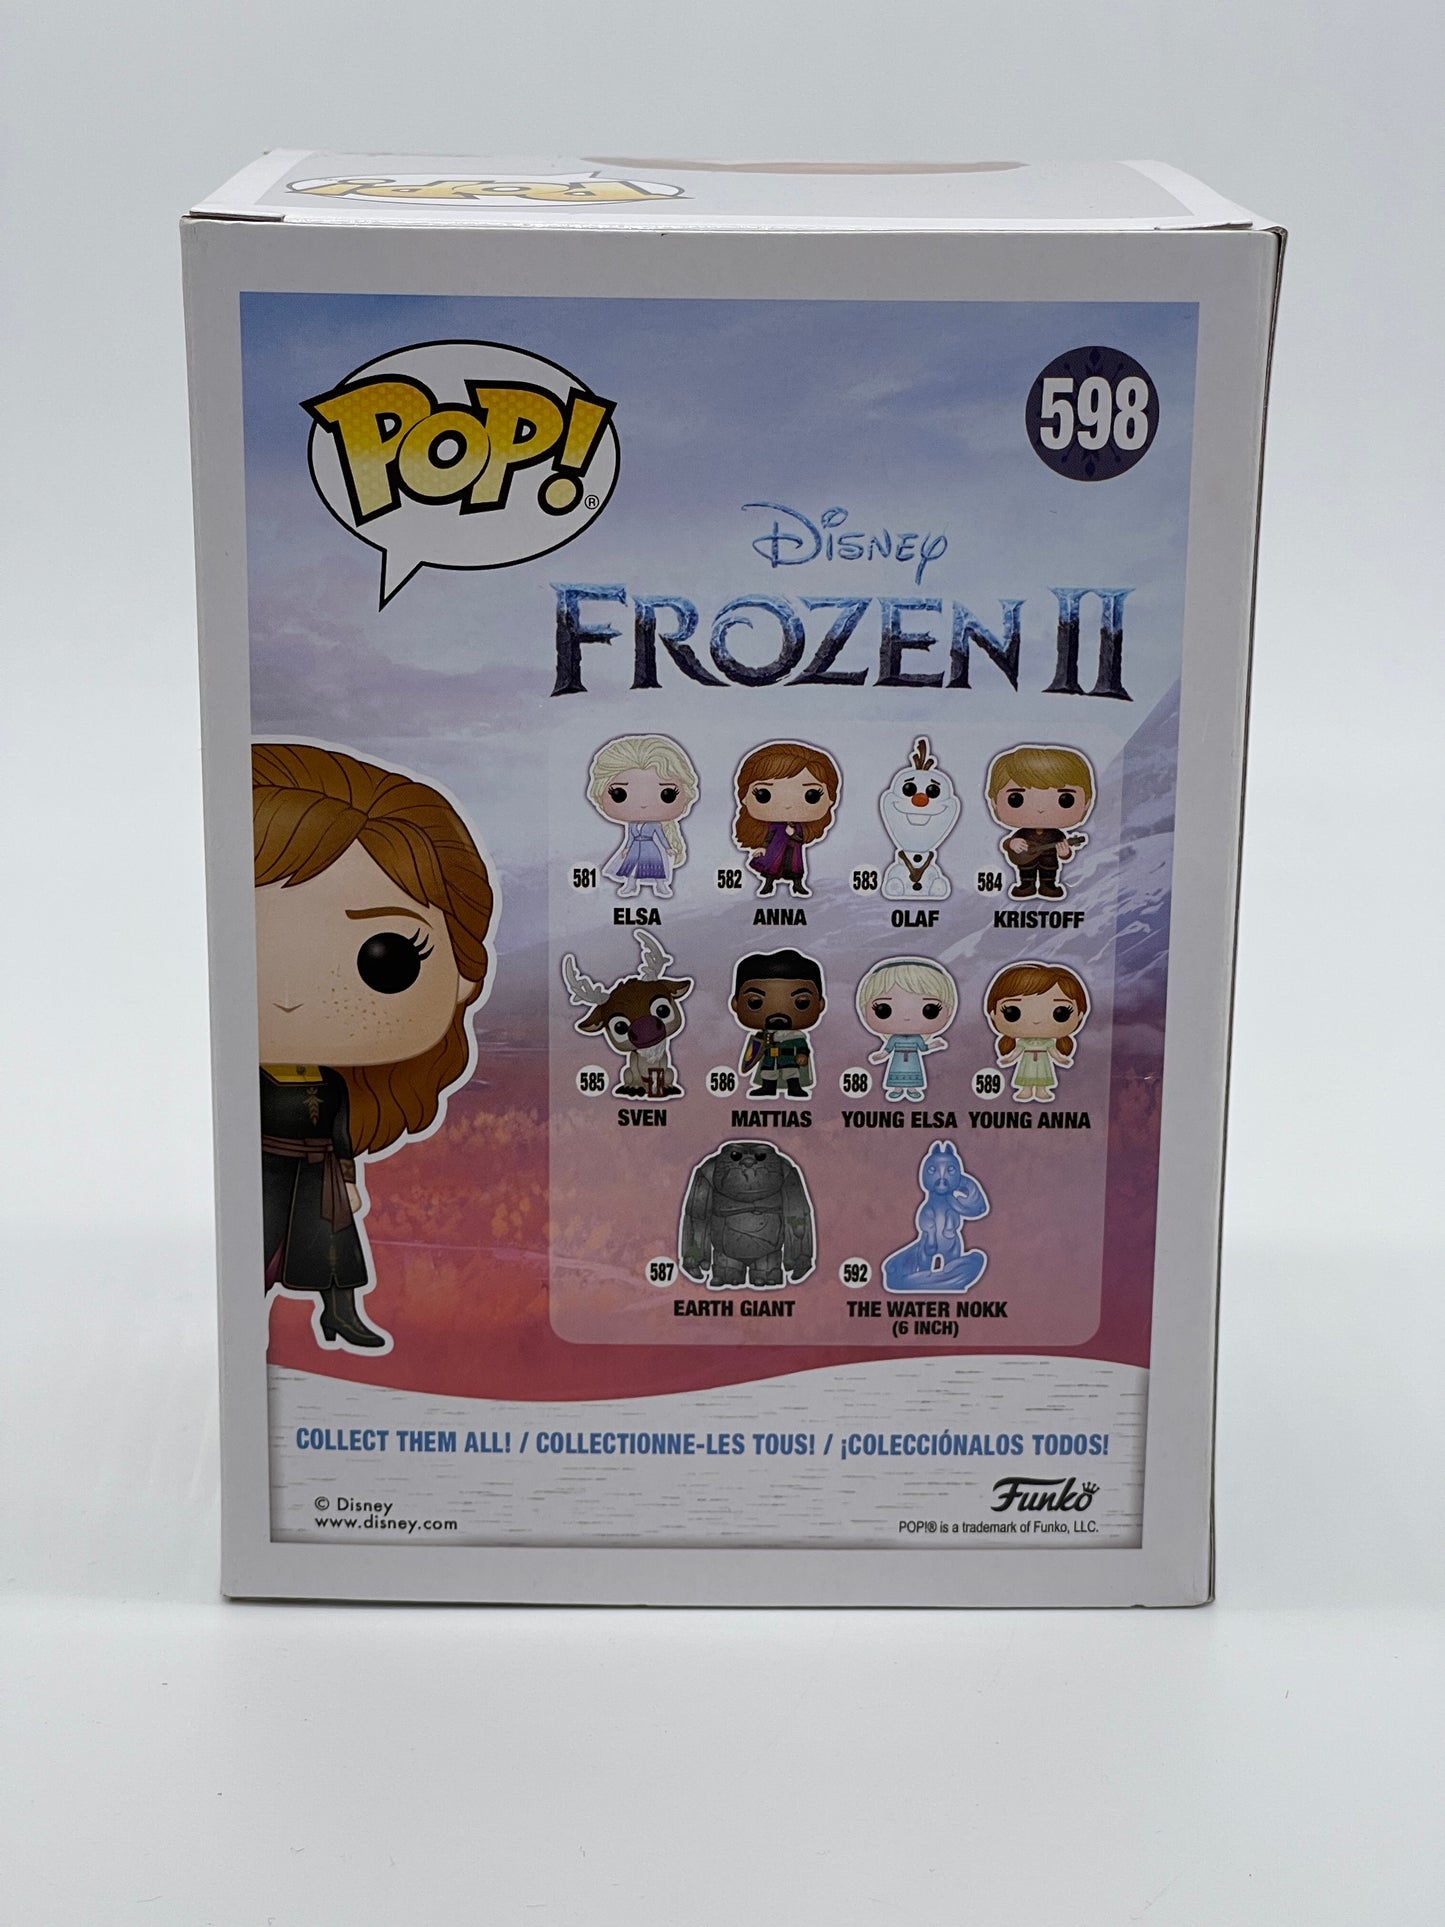 Funko Pop Disney Frozen II 598 - Anna - Special Edition